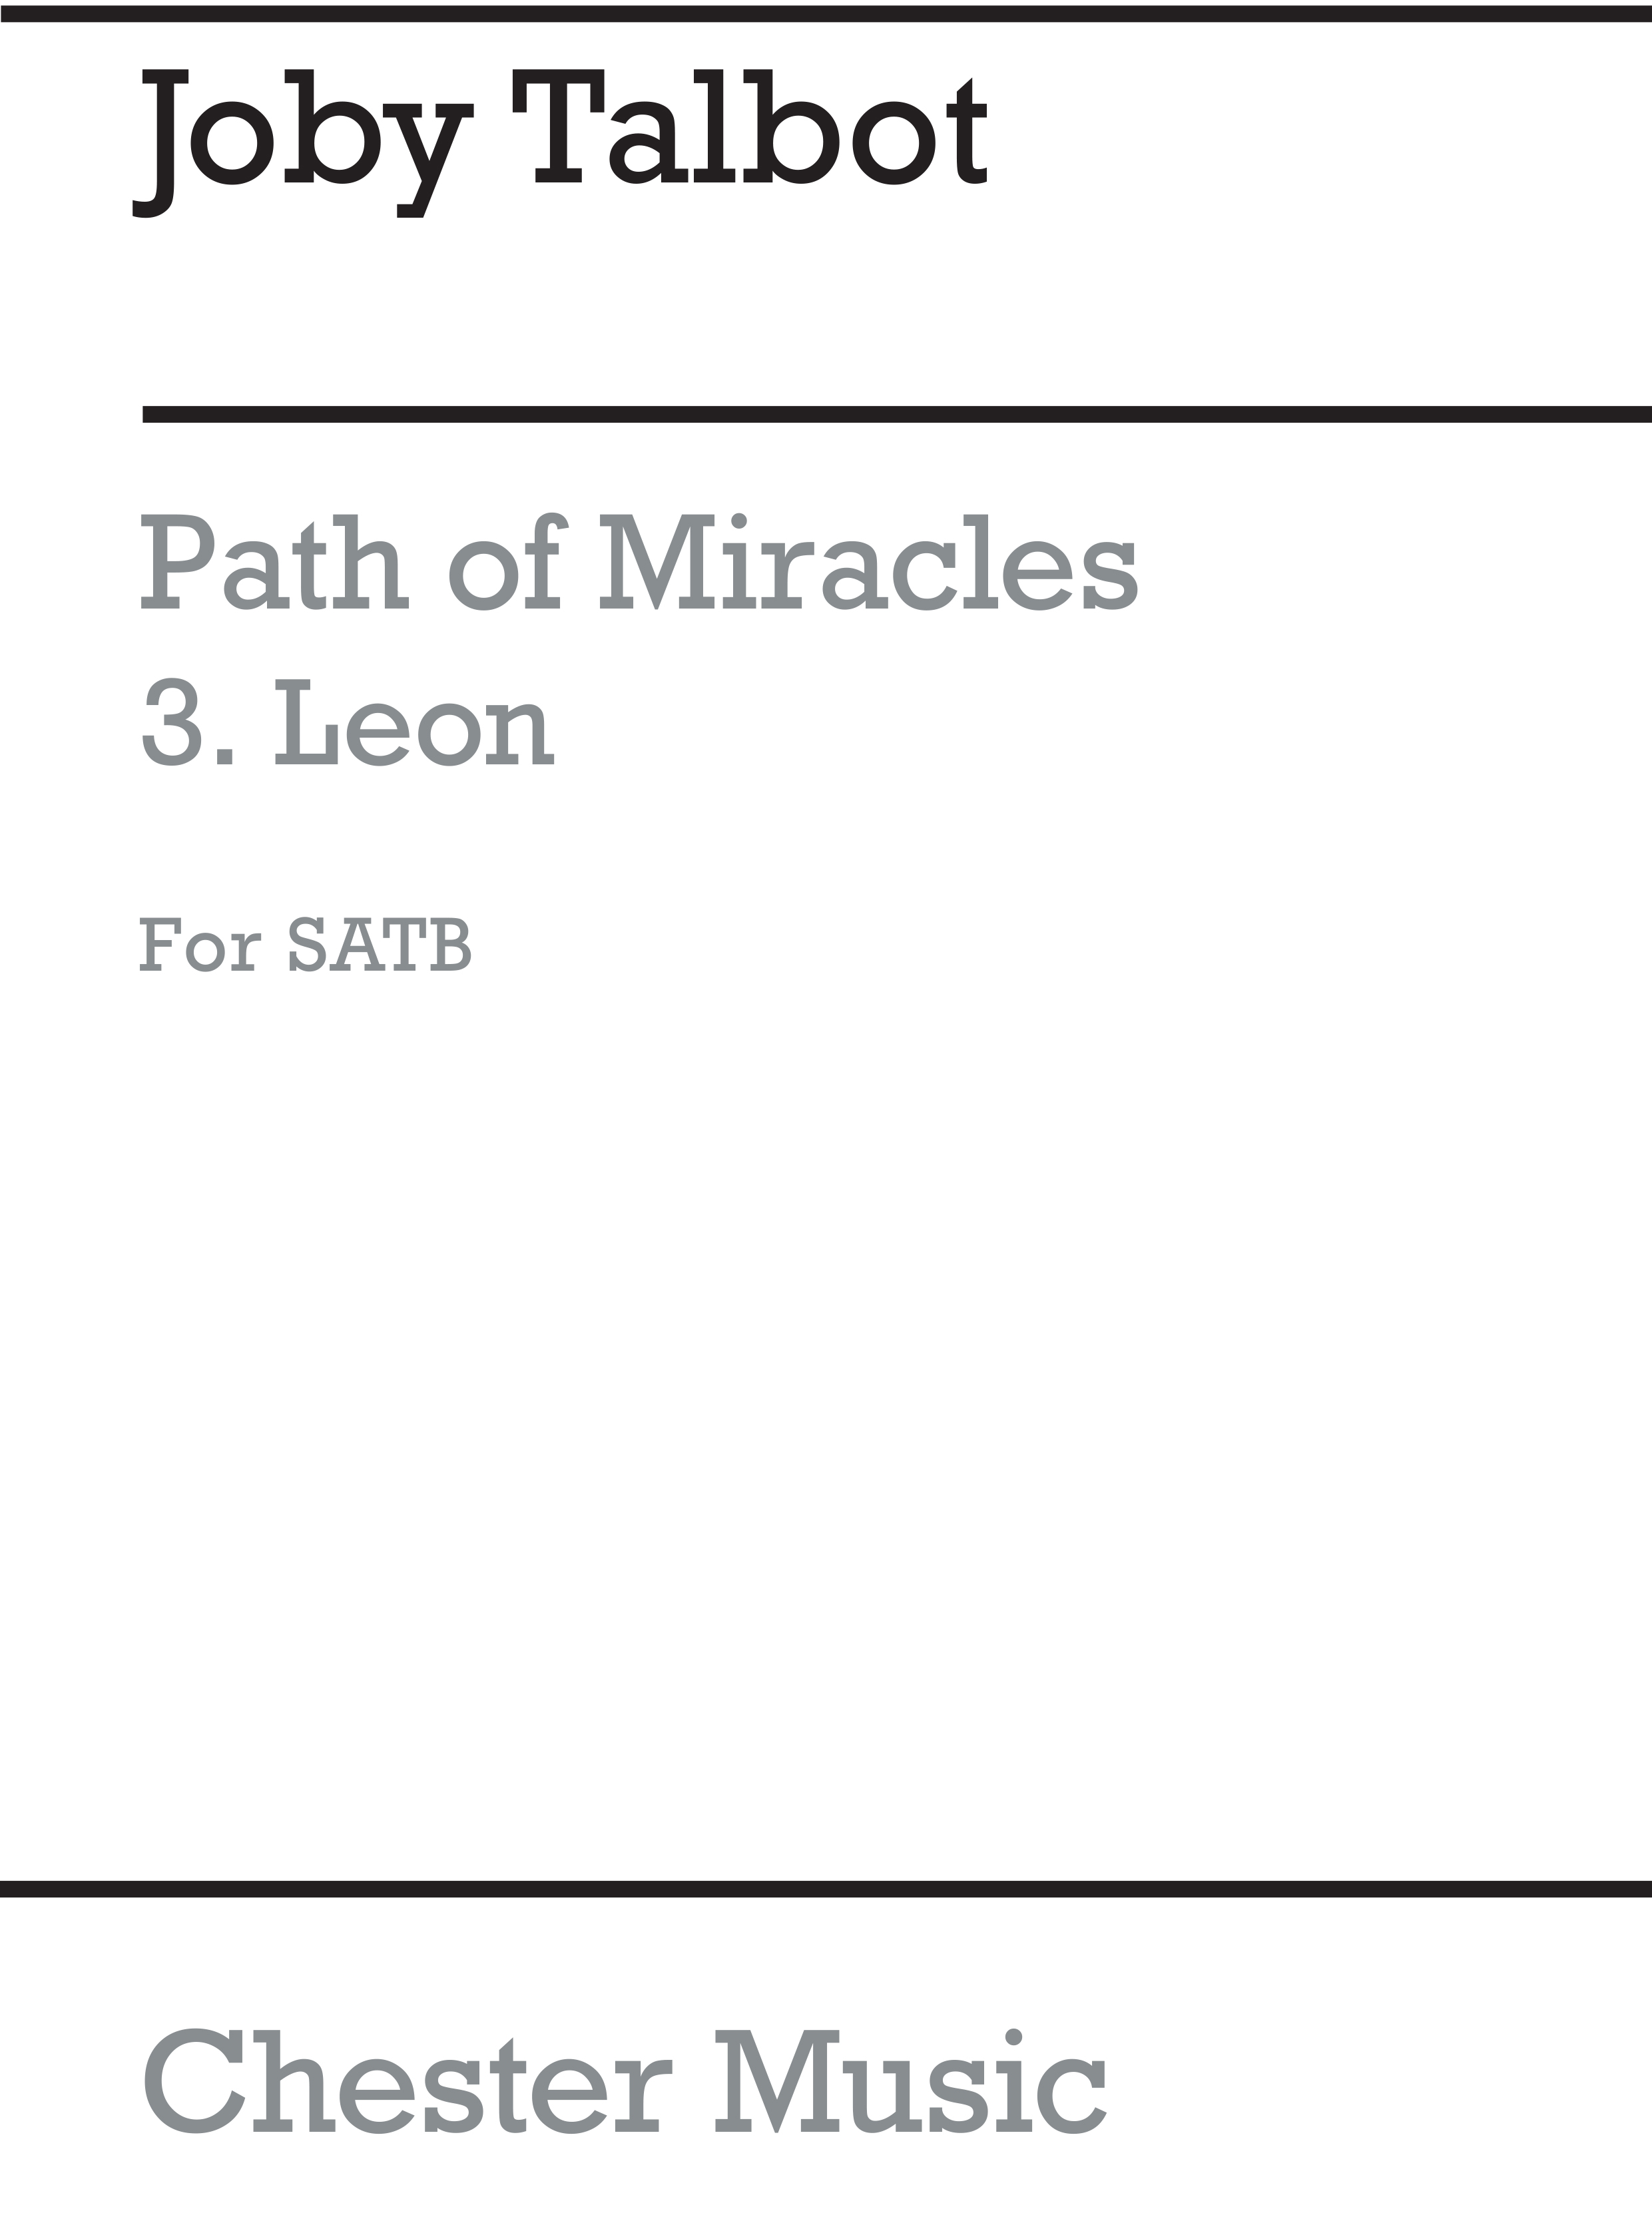 Joby Talbot: Path Of Miracles - Leon